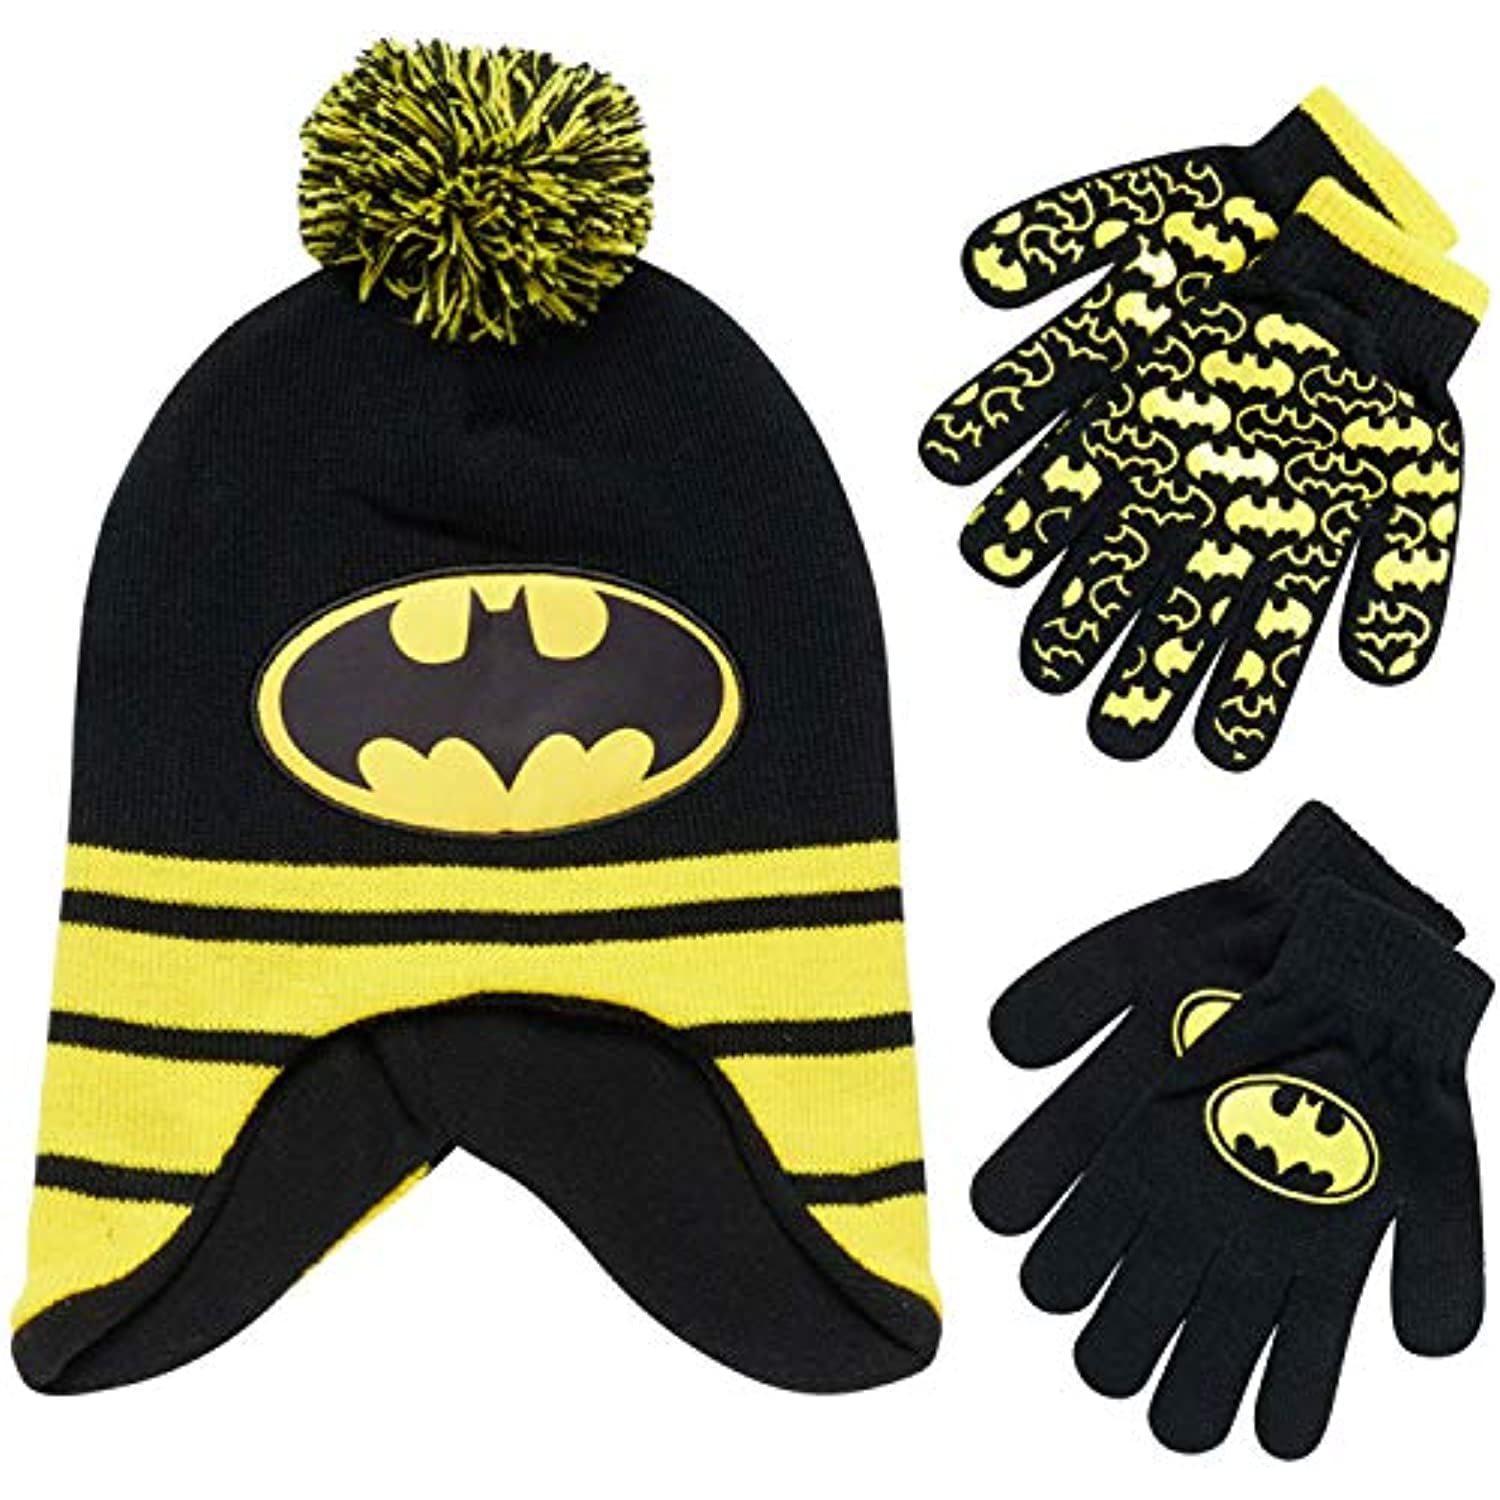 DC Comics Boys Batman Winter Hat 2 Pair Gloves or Mittens Set Toddler/Little Boys